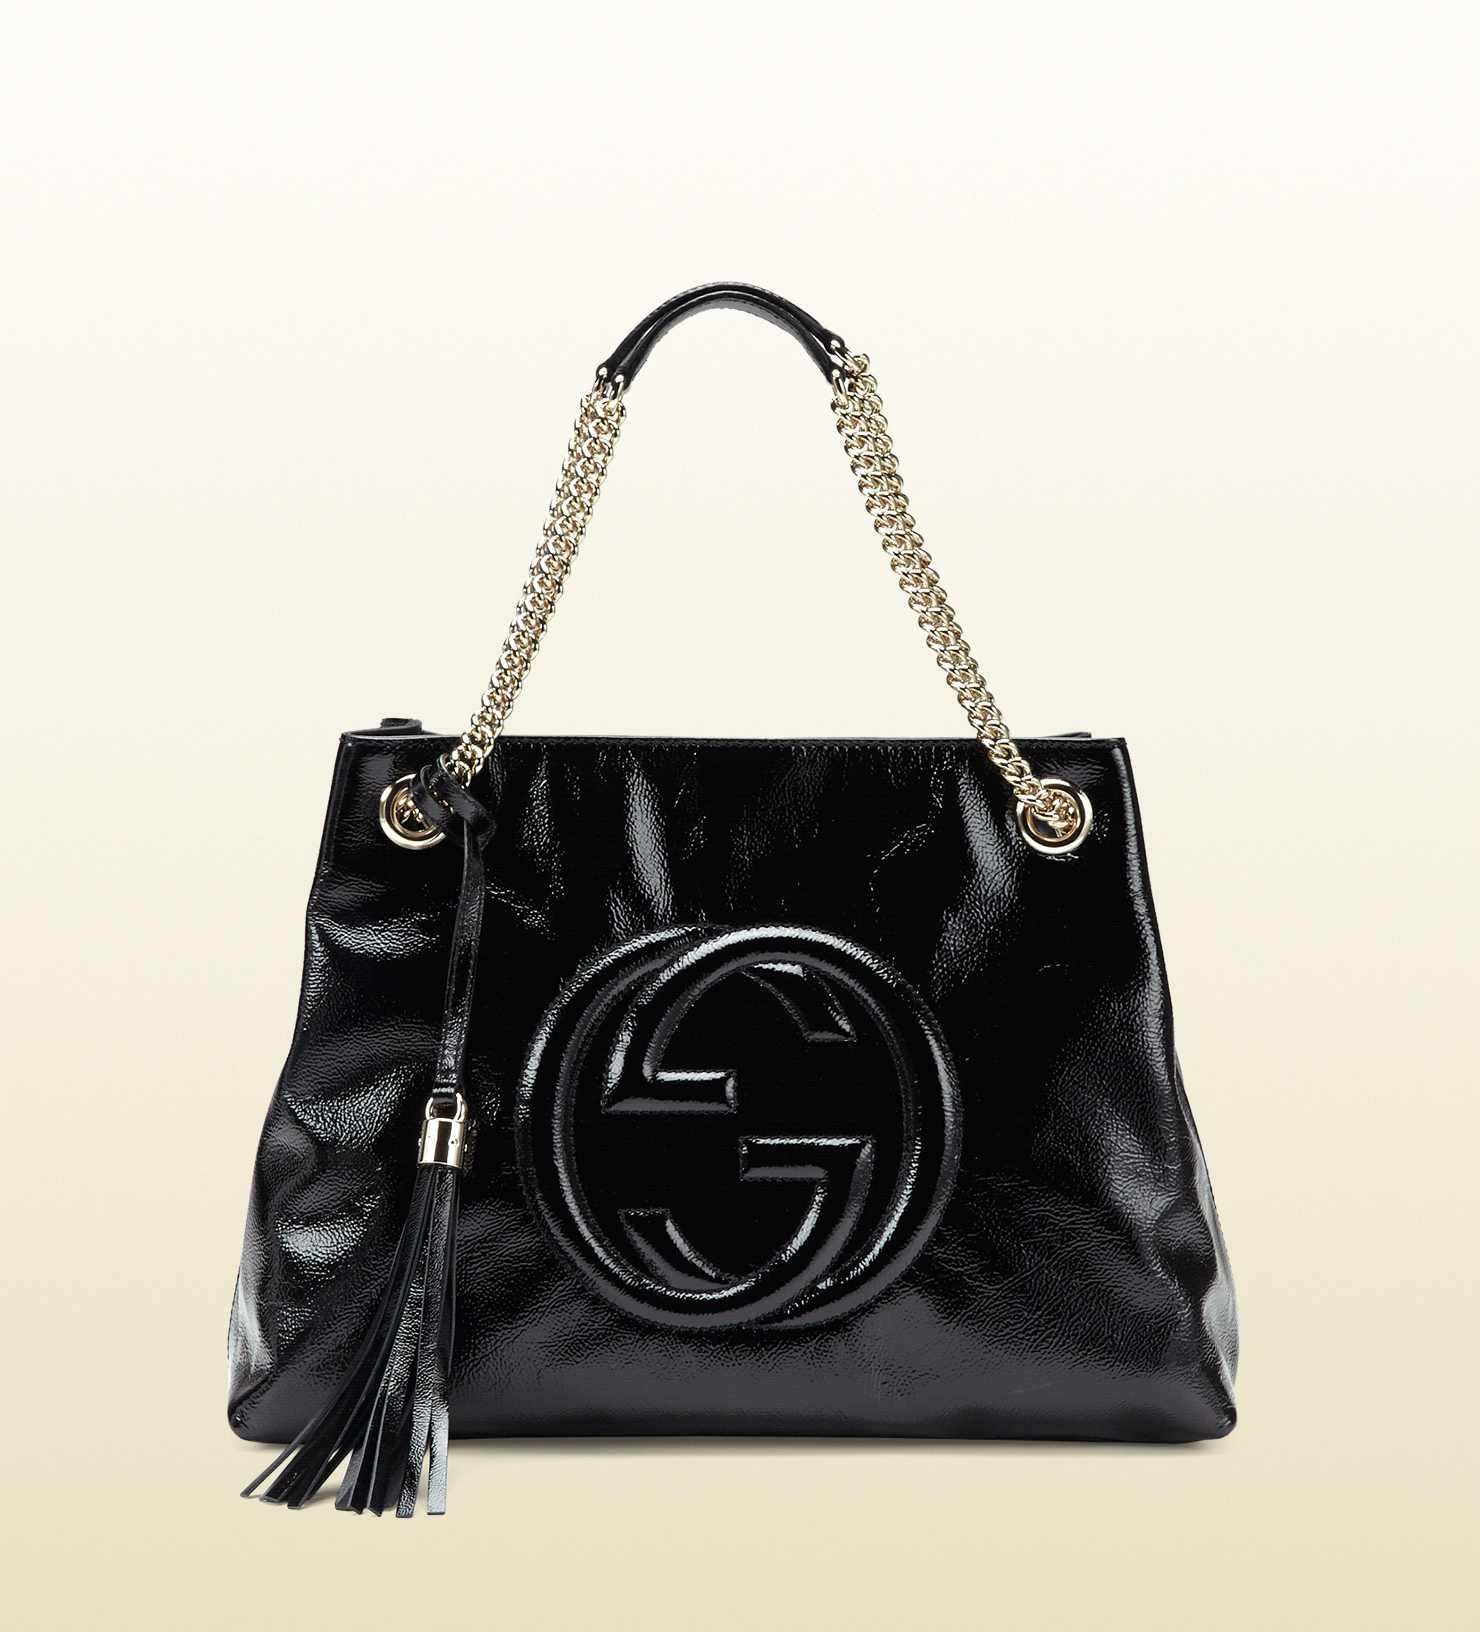 Gucci Soho Soft Patent Leather Shoulder Bag in Black - Lyst